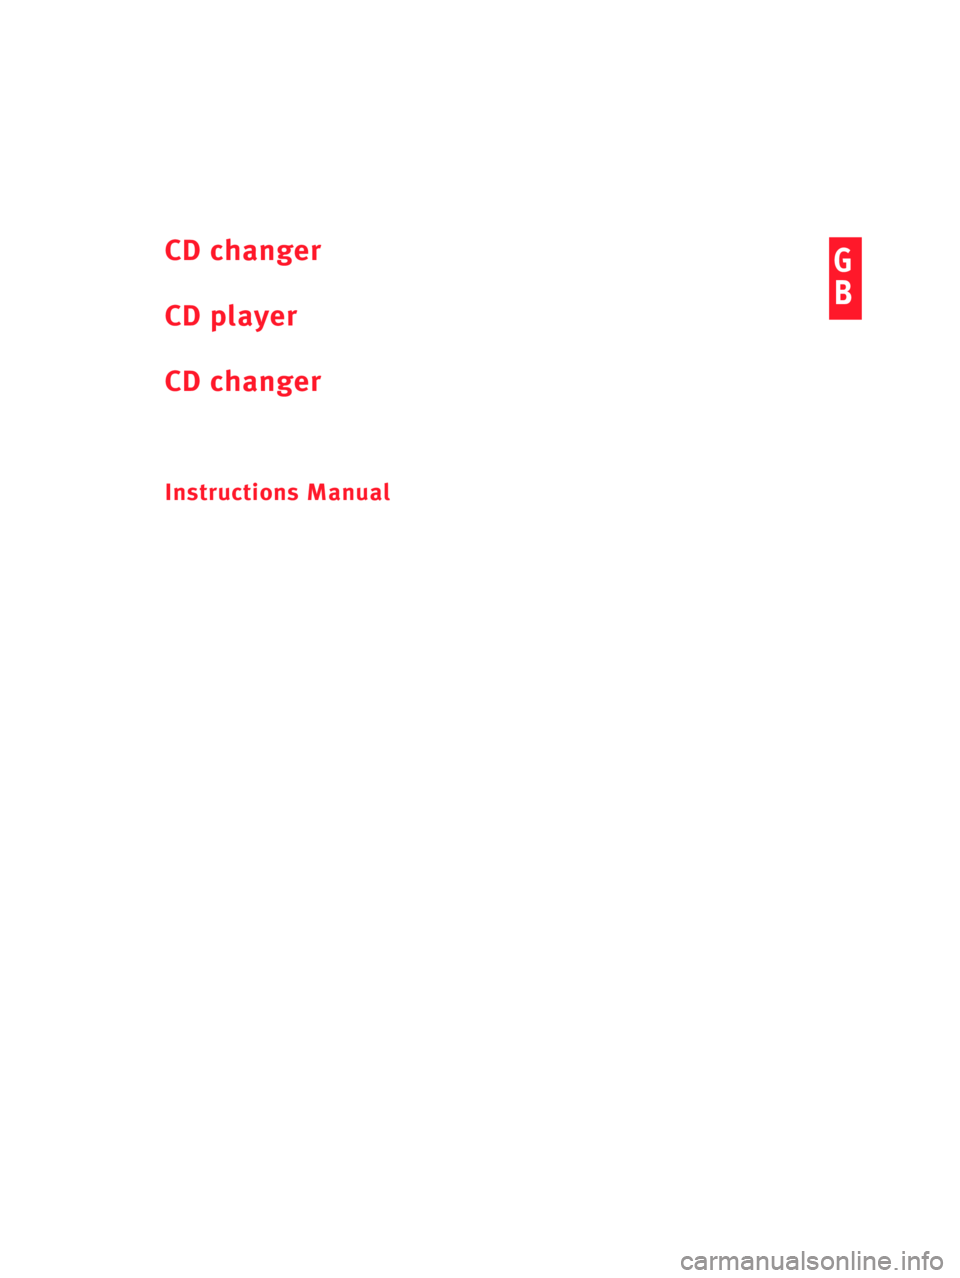 Seat Cordoba 2007  COMPACT DISC G
B
CD changer 
CD player
CD changer
Instructions Manual  